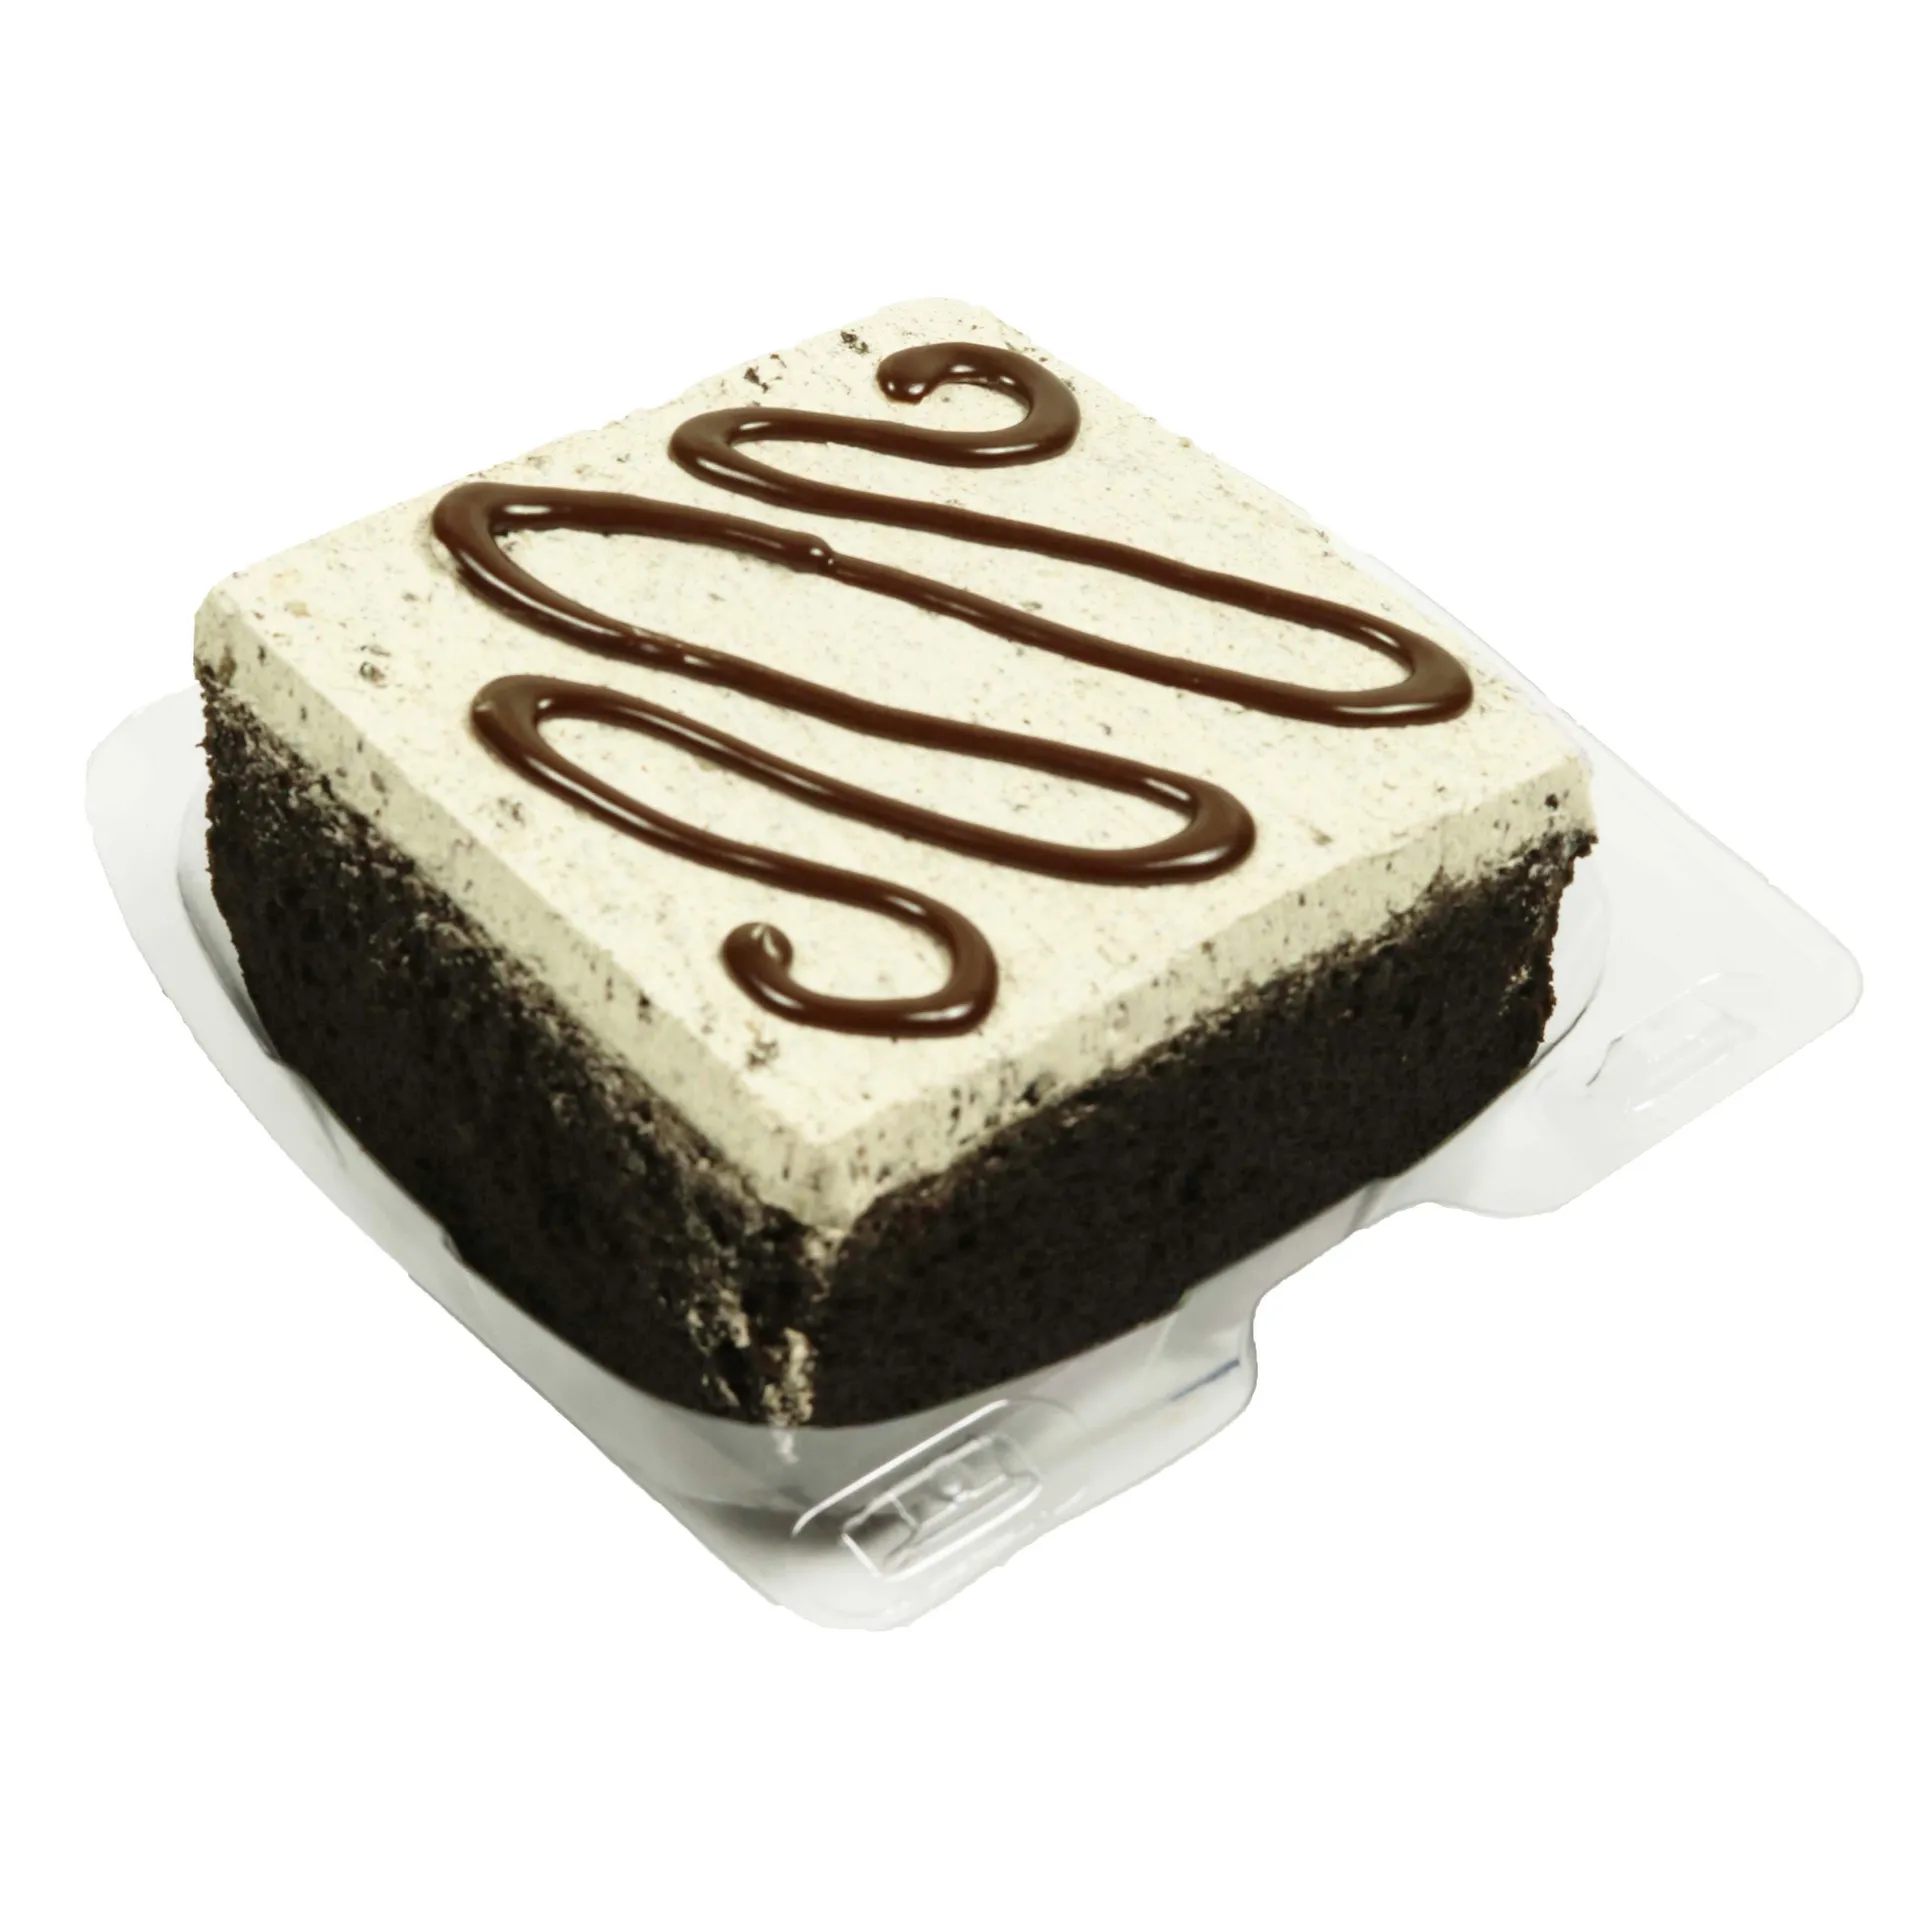 H‑E‑B Bakery OREO Chocolate Cake Slice